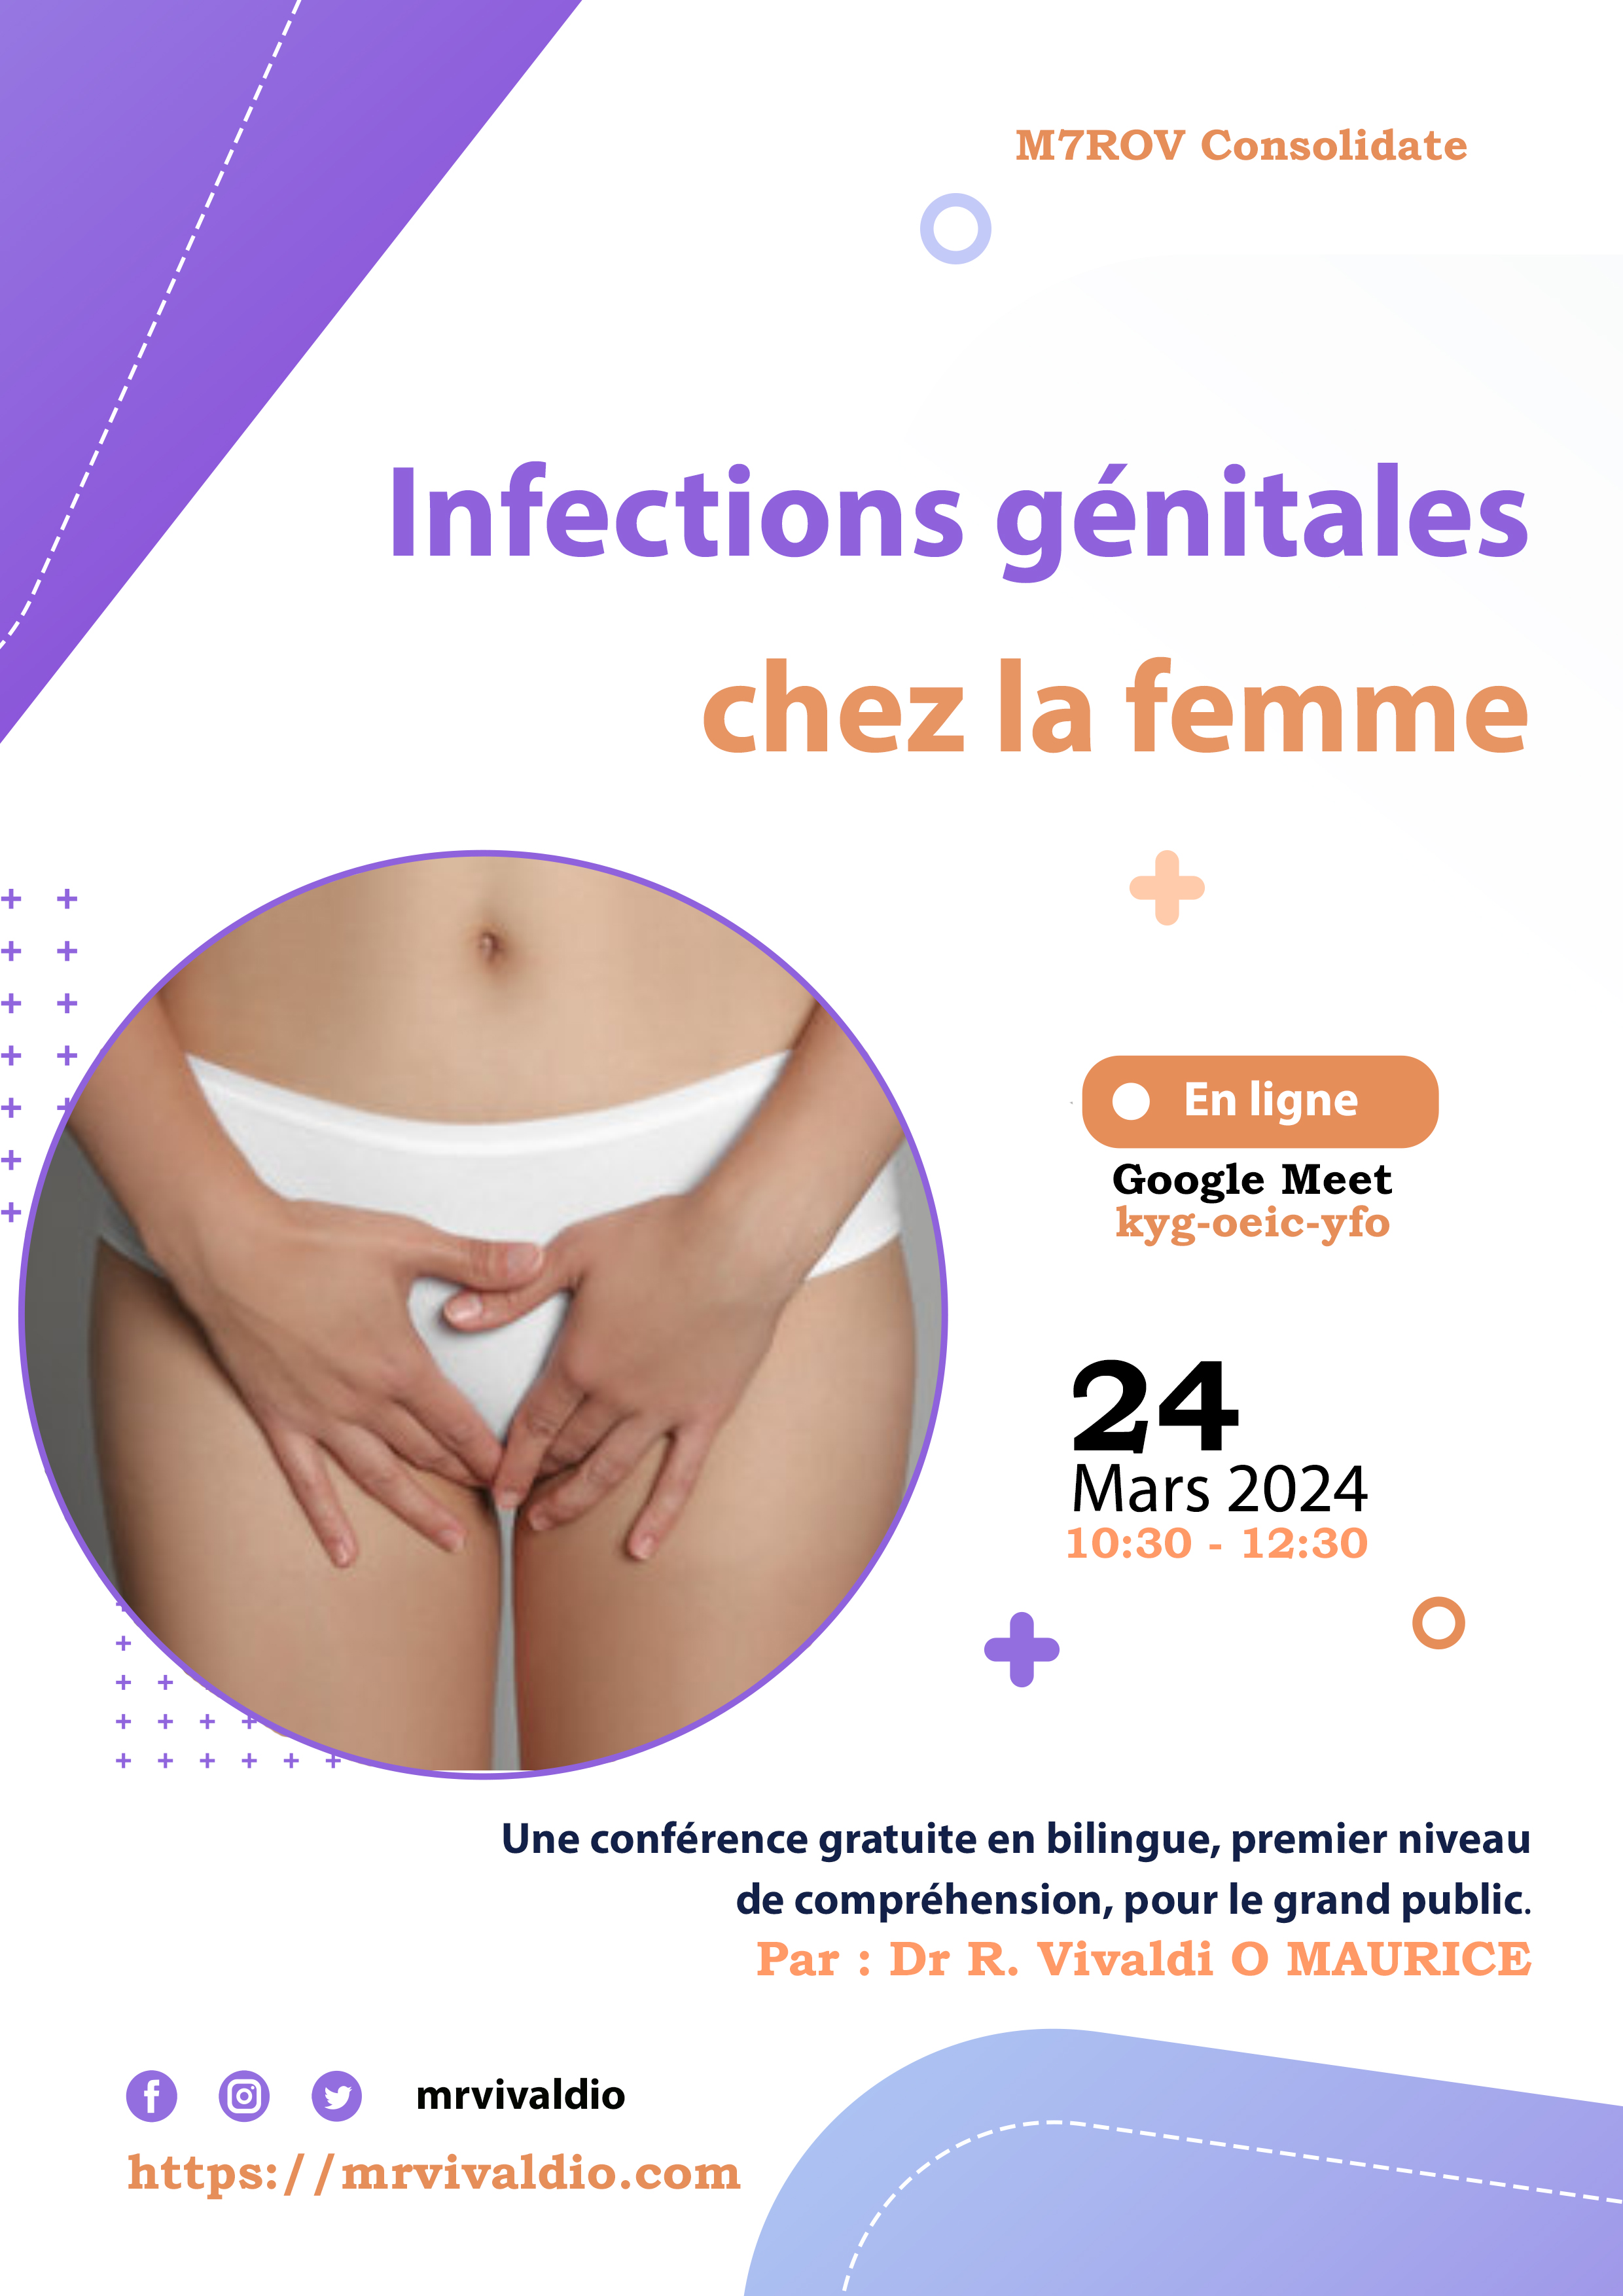 Event of Dr R. Vivaldi O MAURICE on Infections génitales chez la femme